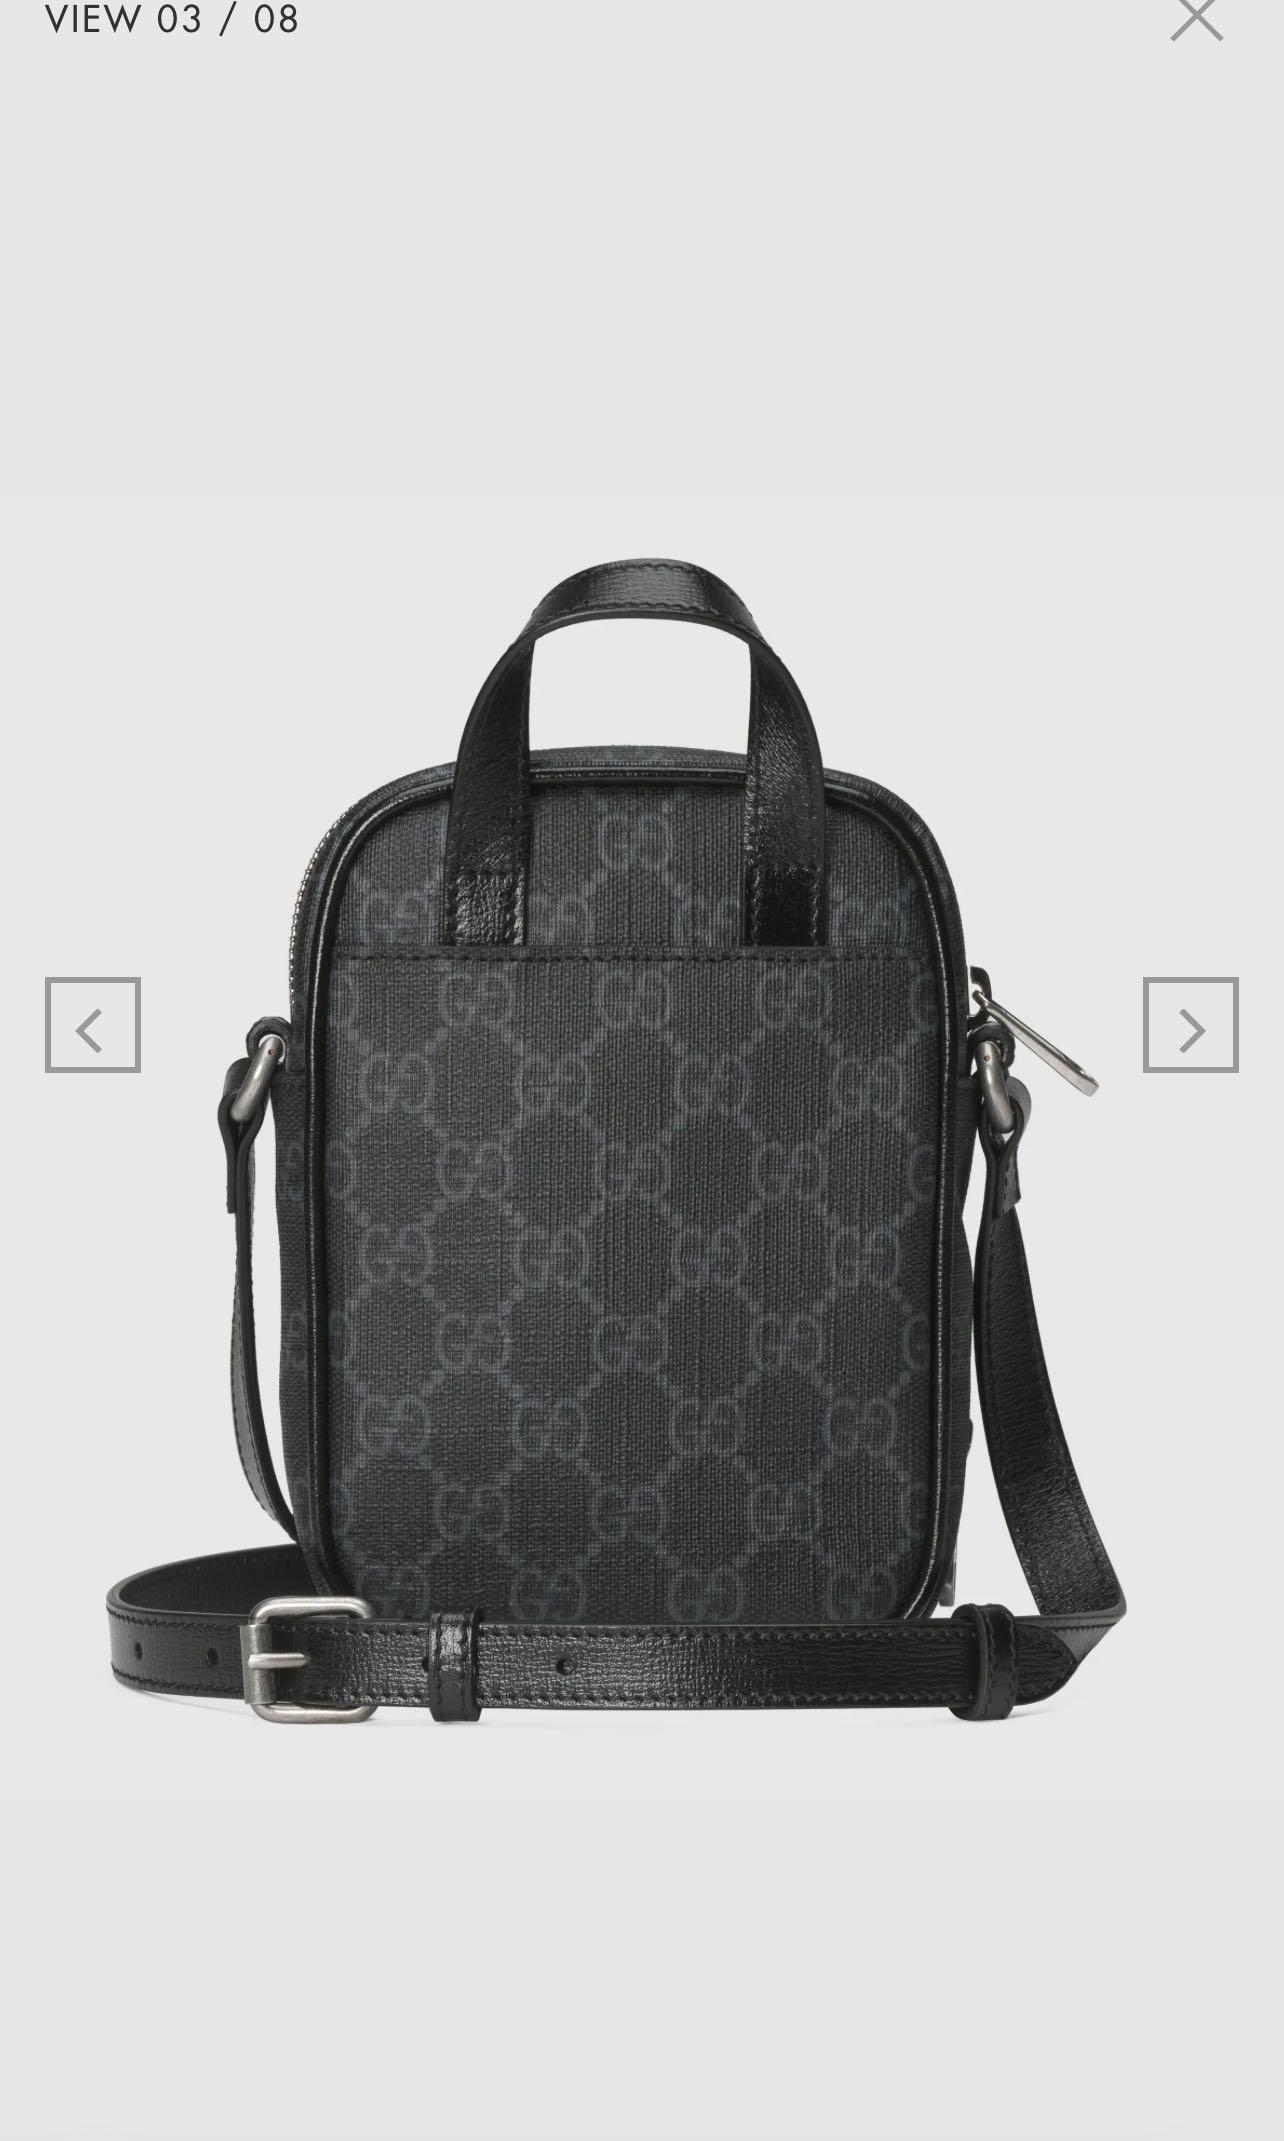 Authentic Gucci Men Bags:, Gucci Briefcases